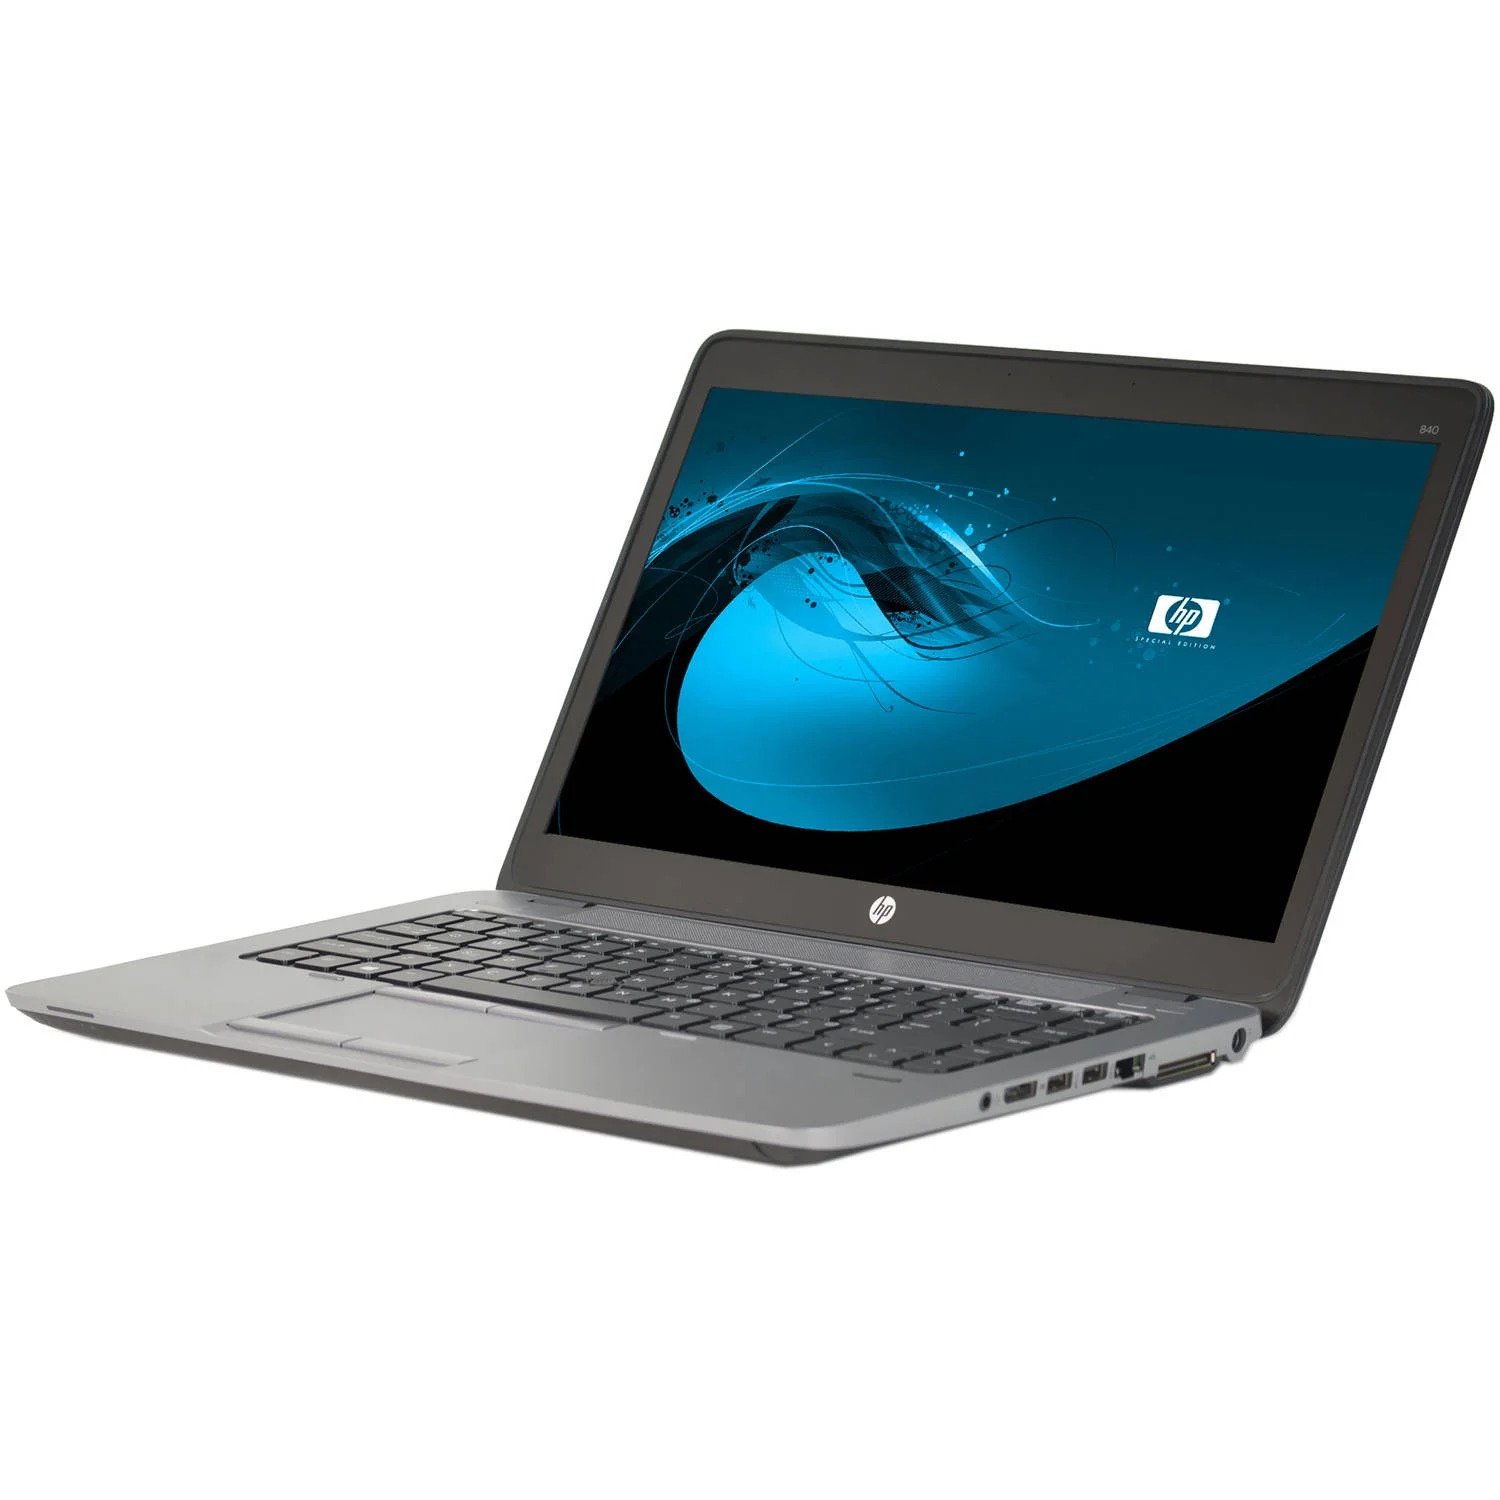 HP EliteBook 840 G1 Intel Core i5-4300U 2.27GHz 8GB 320GB   WINDOWS 10 PRO 